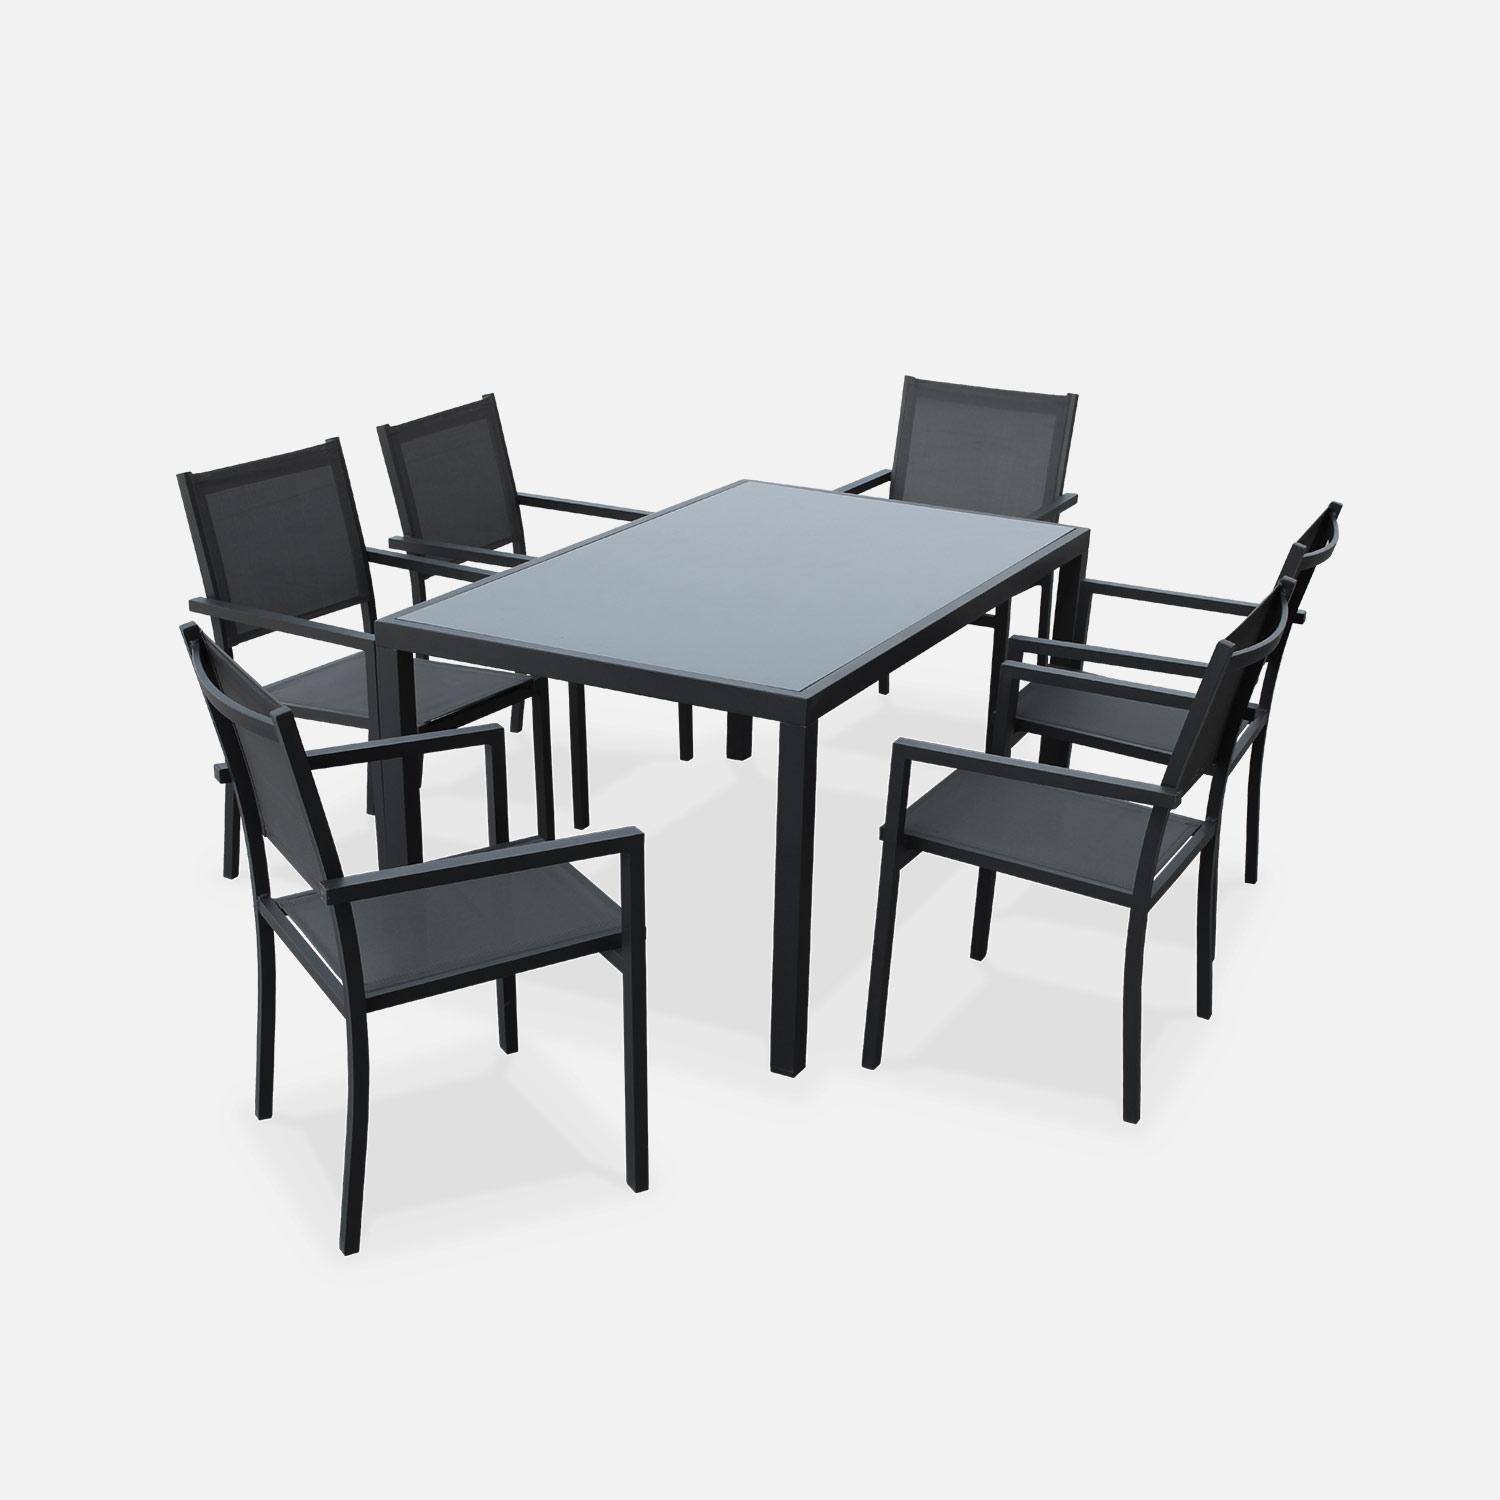 Gartengarnitur aus Aluminium mit Textilene - Capua - Anthrazit, grau - 6 Plätze - 1 großer rechteckiger Tisch, 6 stapelbare Sessel Photo2